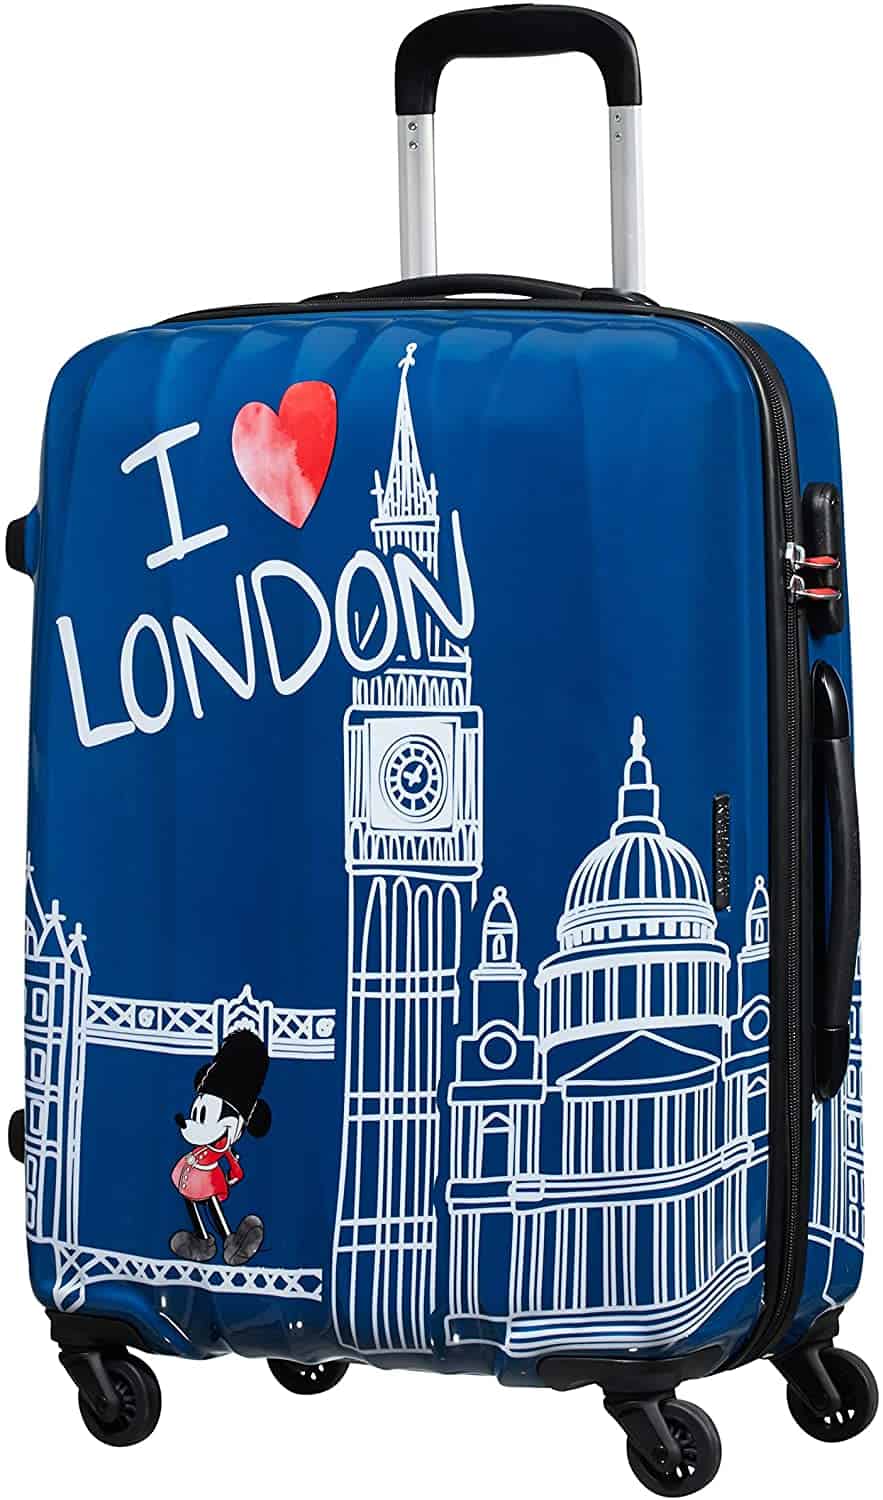 Bonita maleta Dinsey Mickey Mouse con estampado London